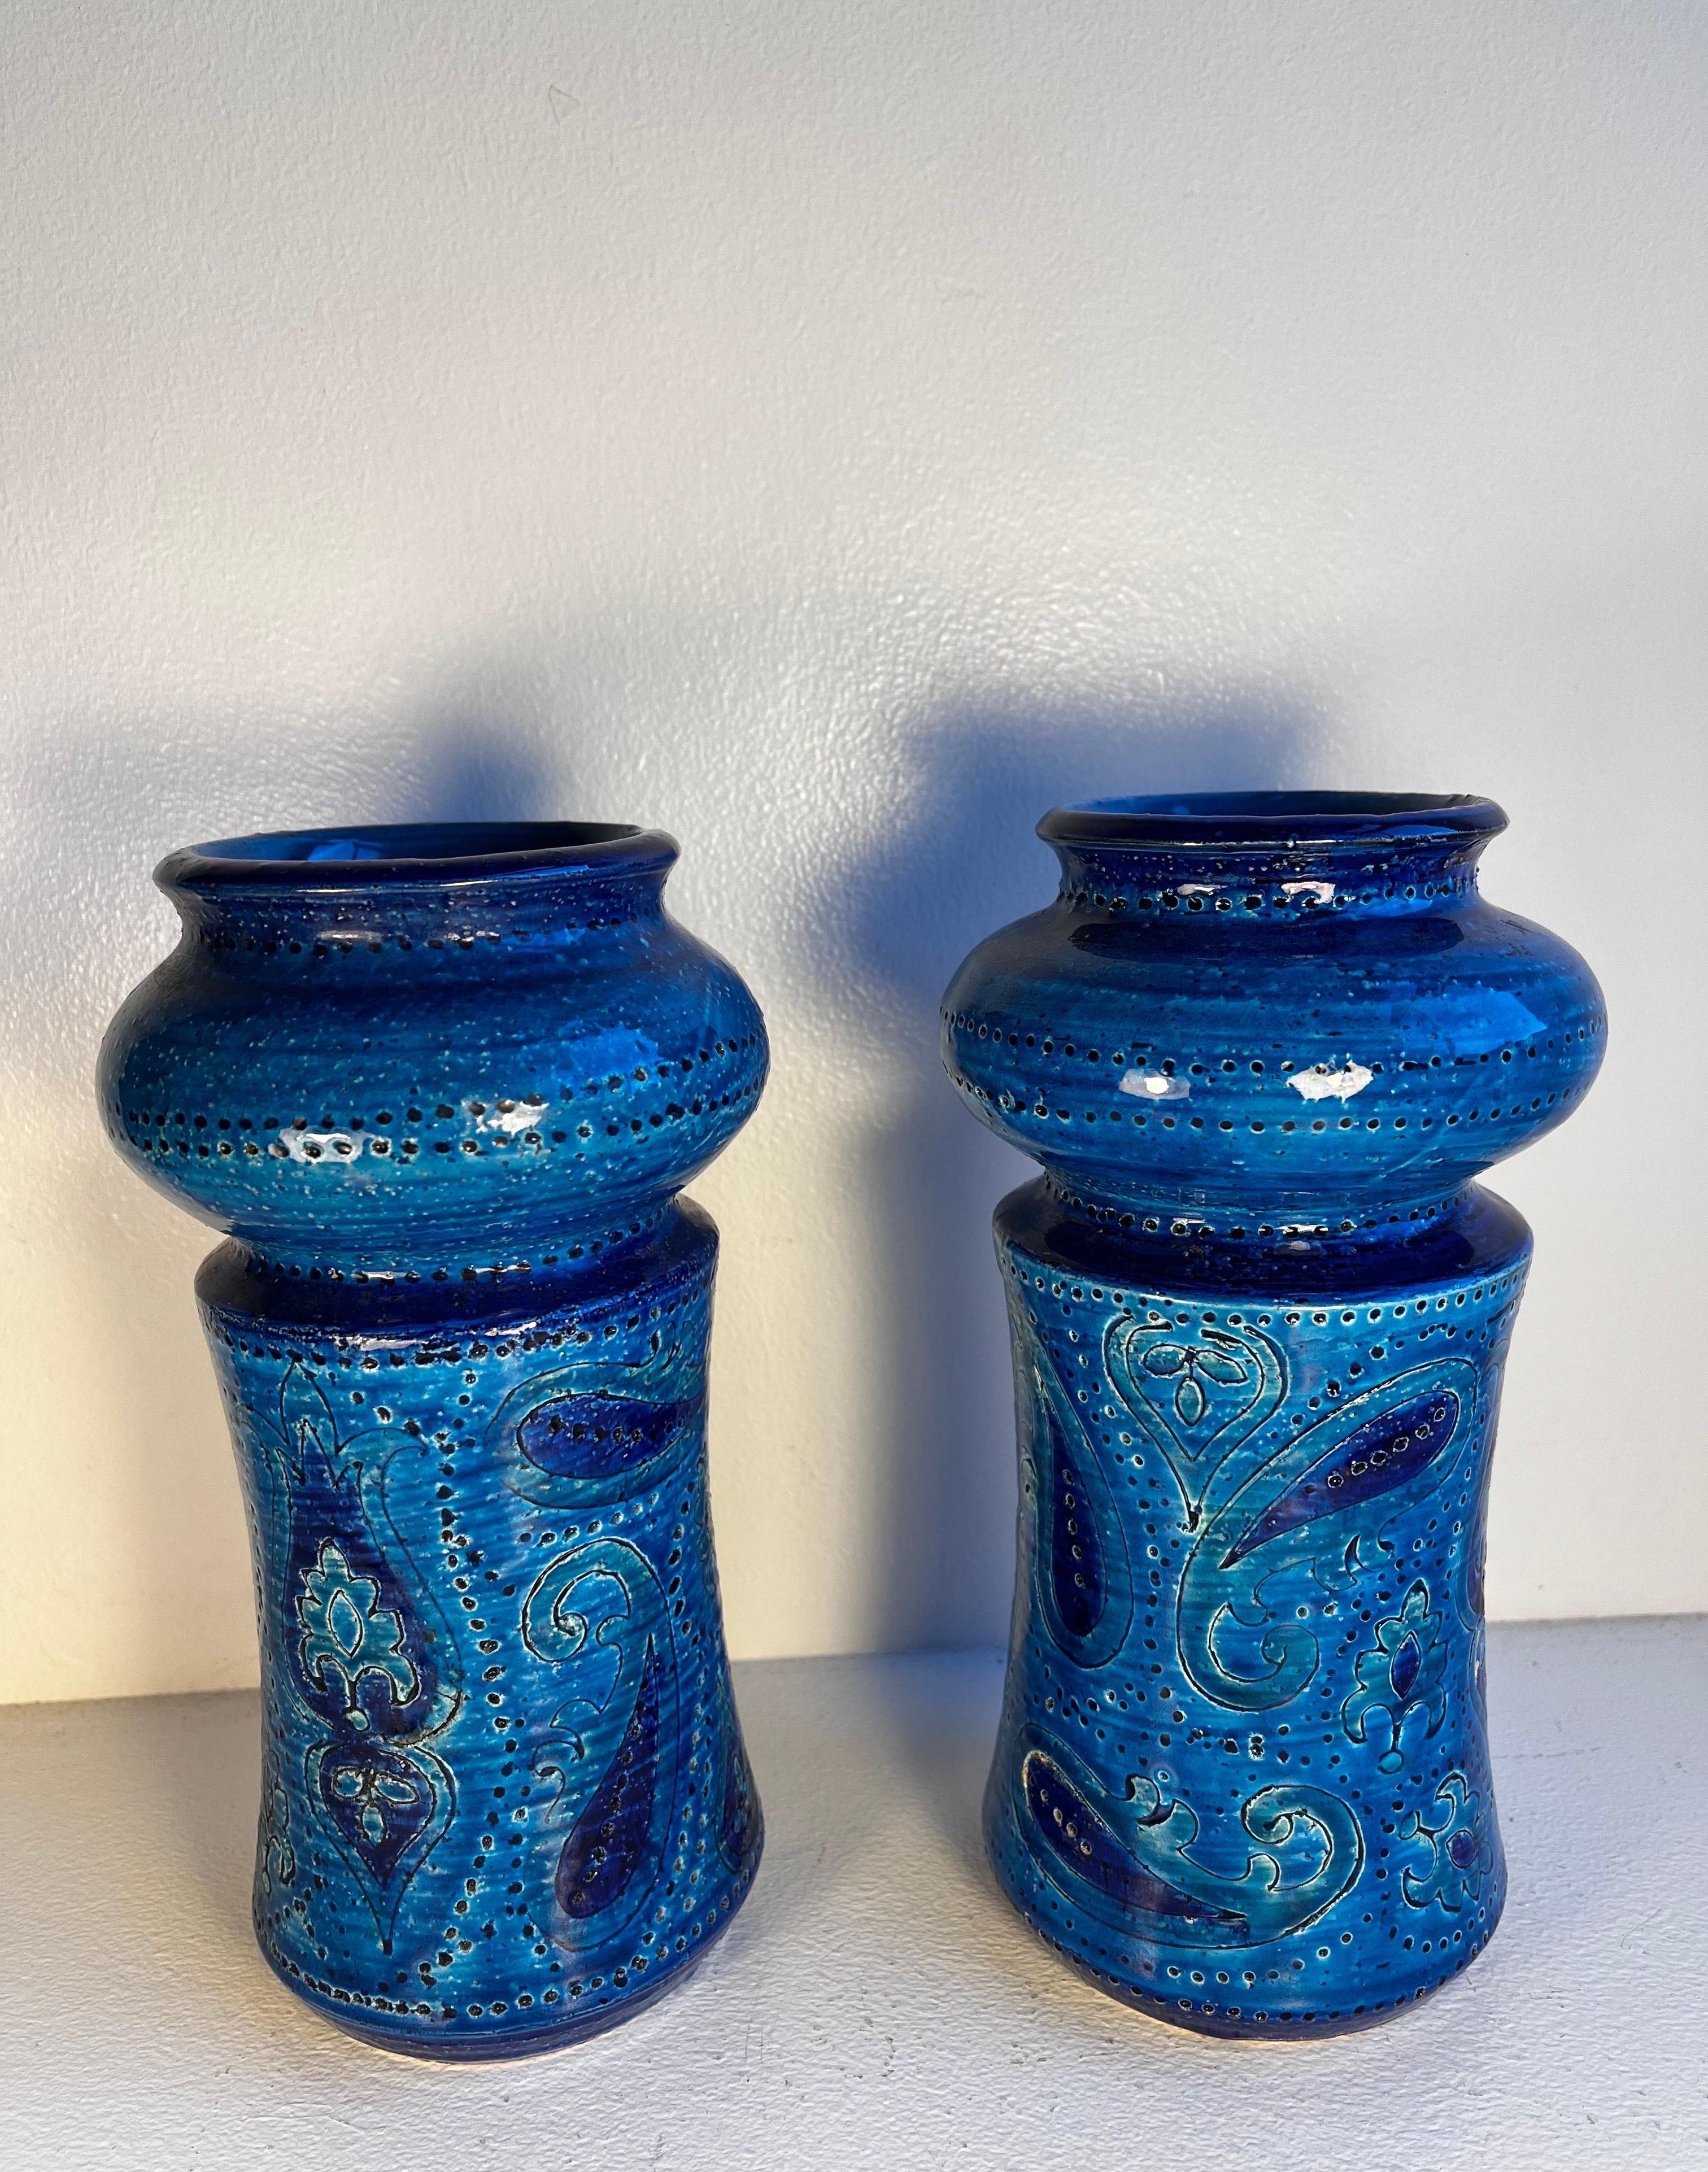 Vintage Bitossi Vases for Rosenthal Netter
circa 1960.  Sold Separately!

